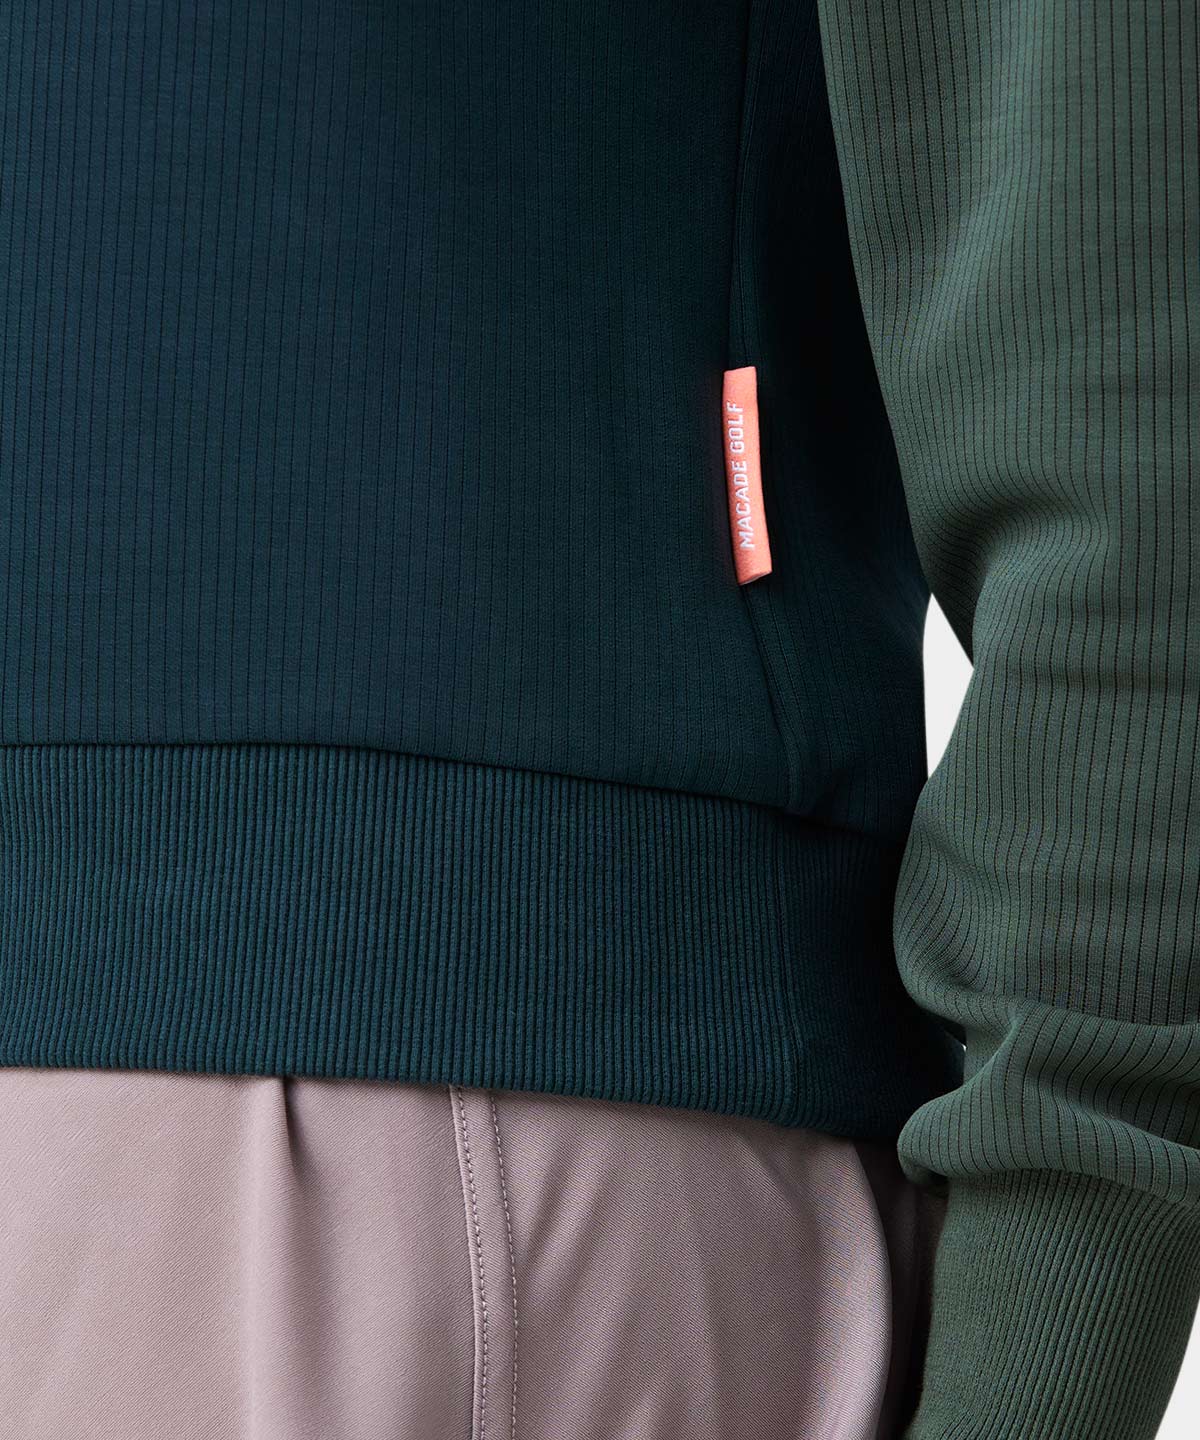 Pine Tech Range Zip Sweater